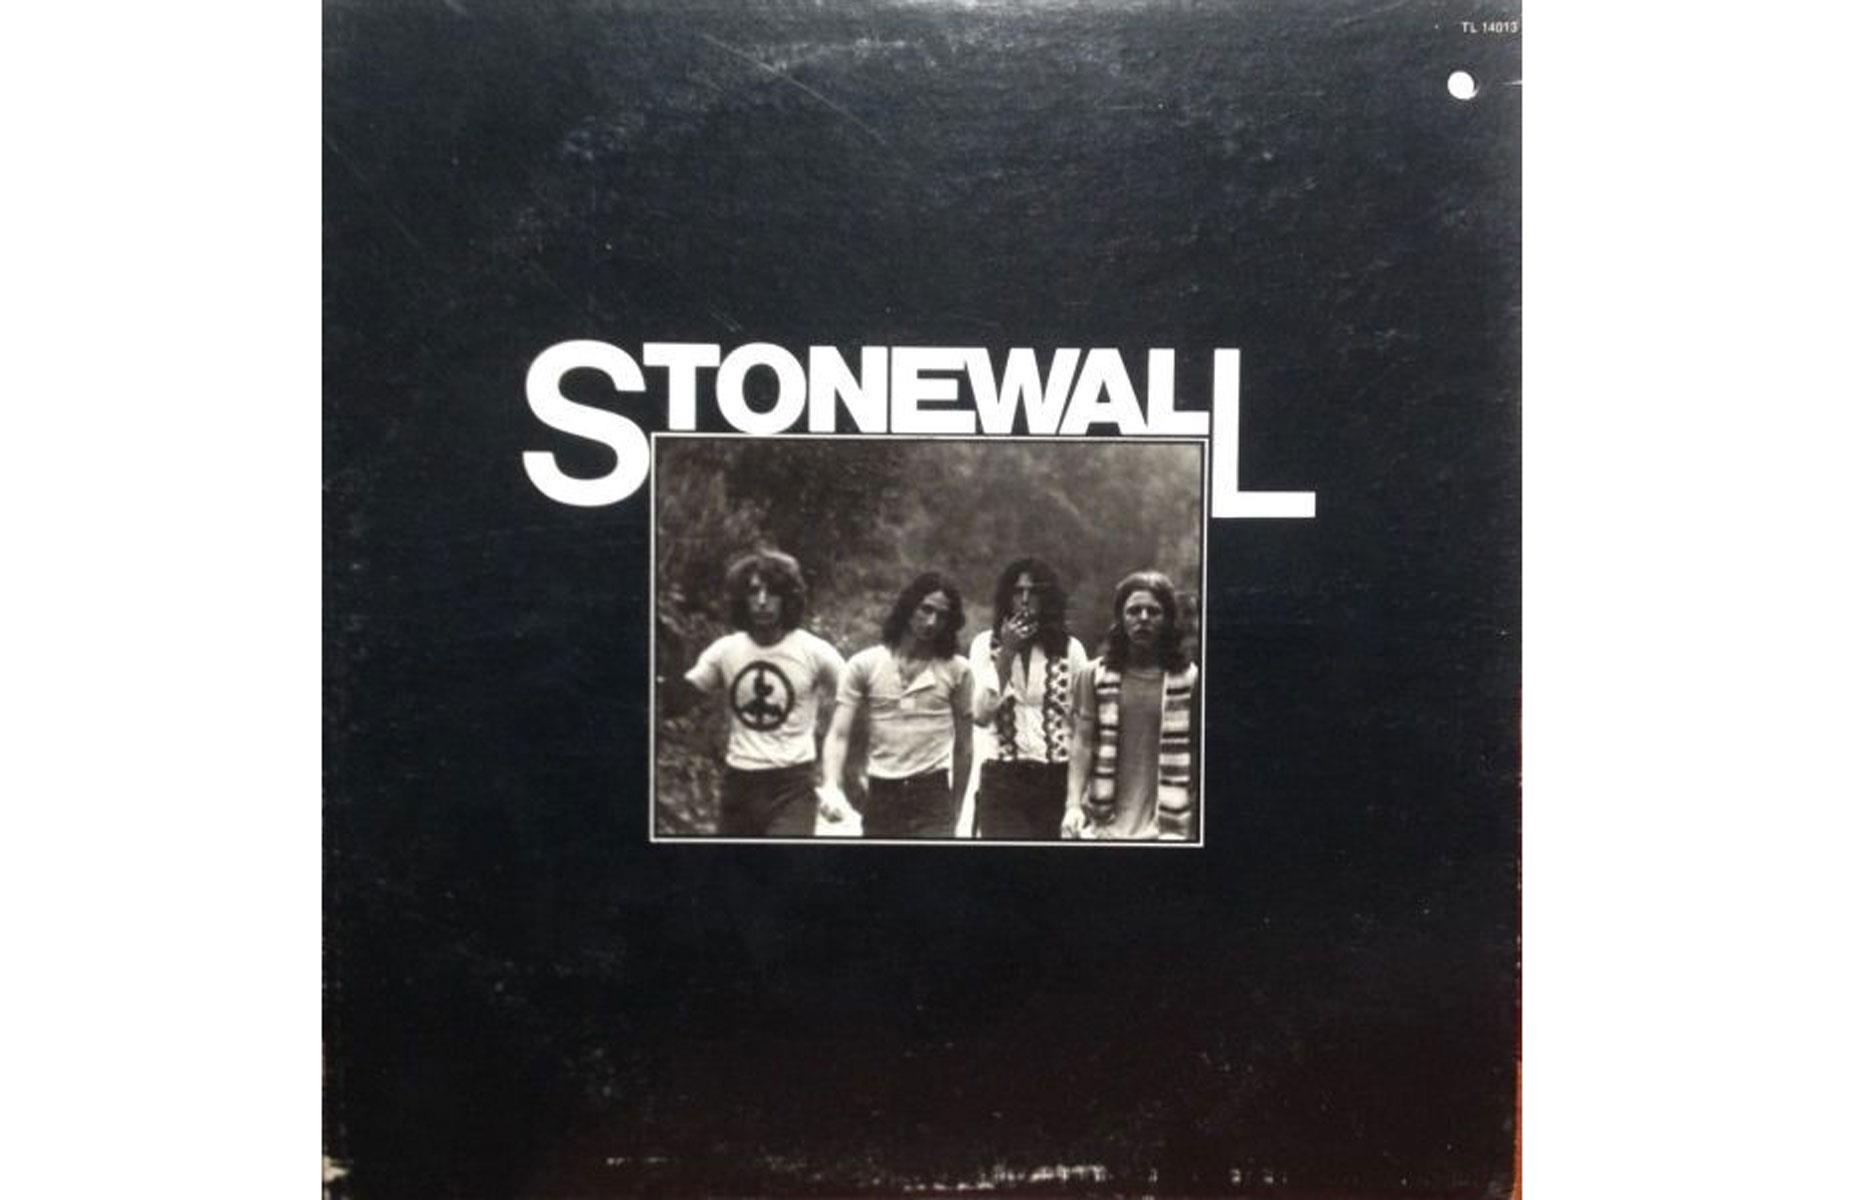 Stonewall – Stonewall: up to $14,000 (£11,895) 